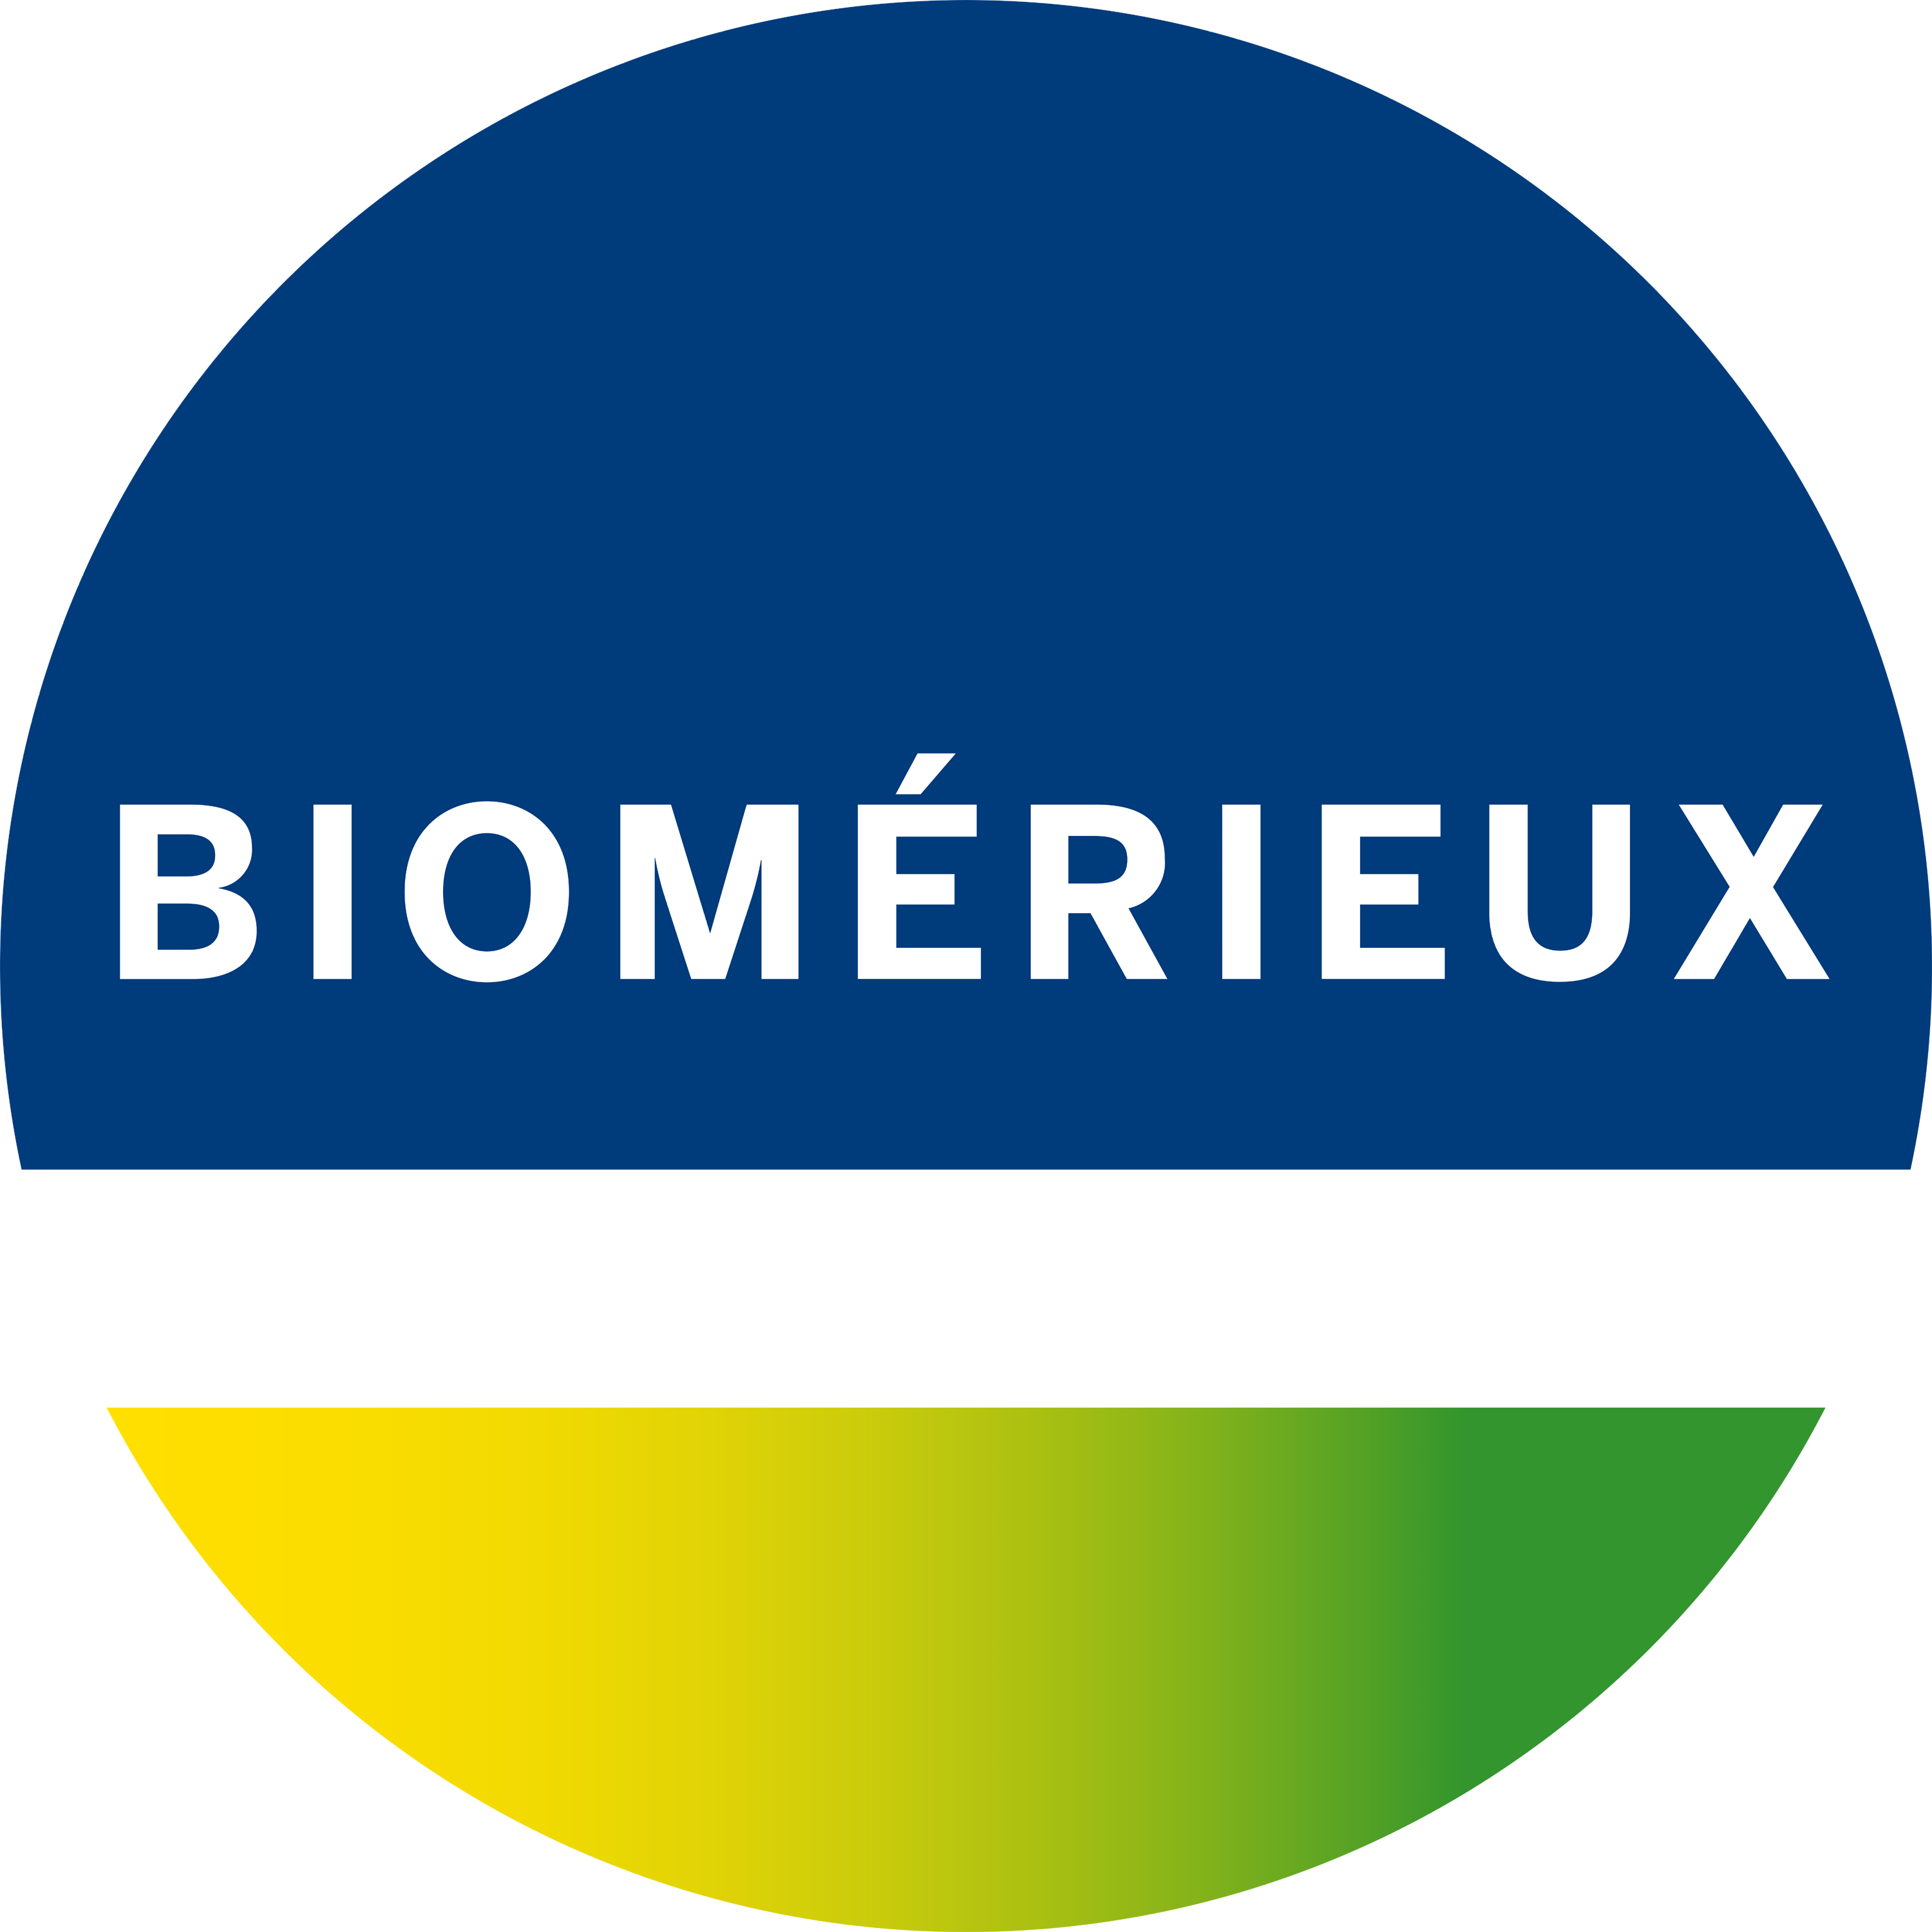 Biomerieux Logo Transparent Image